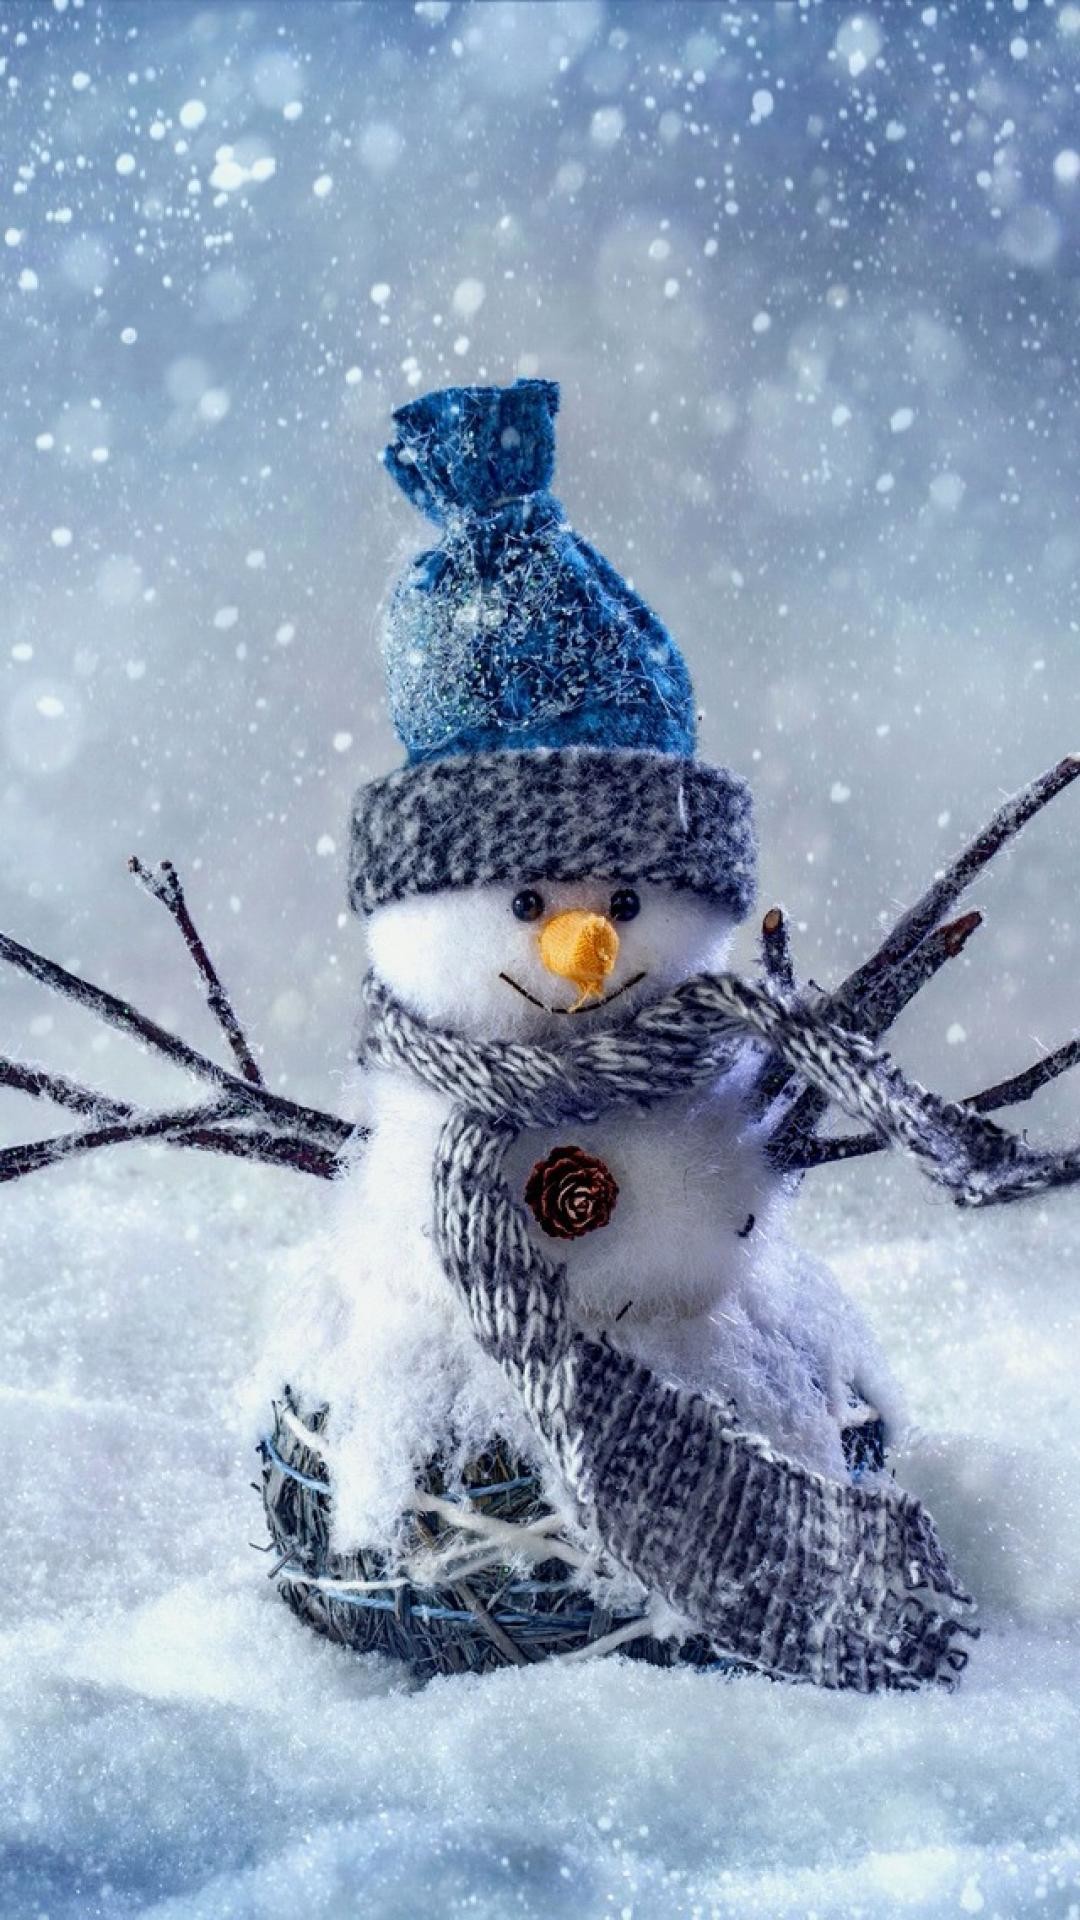 1080x1920 Christmas-Snowman-New-Year-iphone-6-wallpaper-ilikewallpaper_com